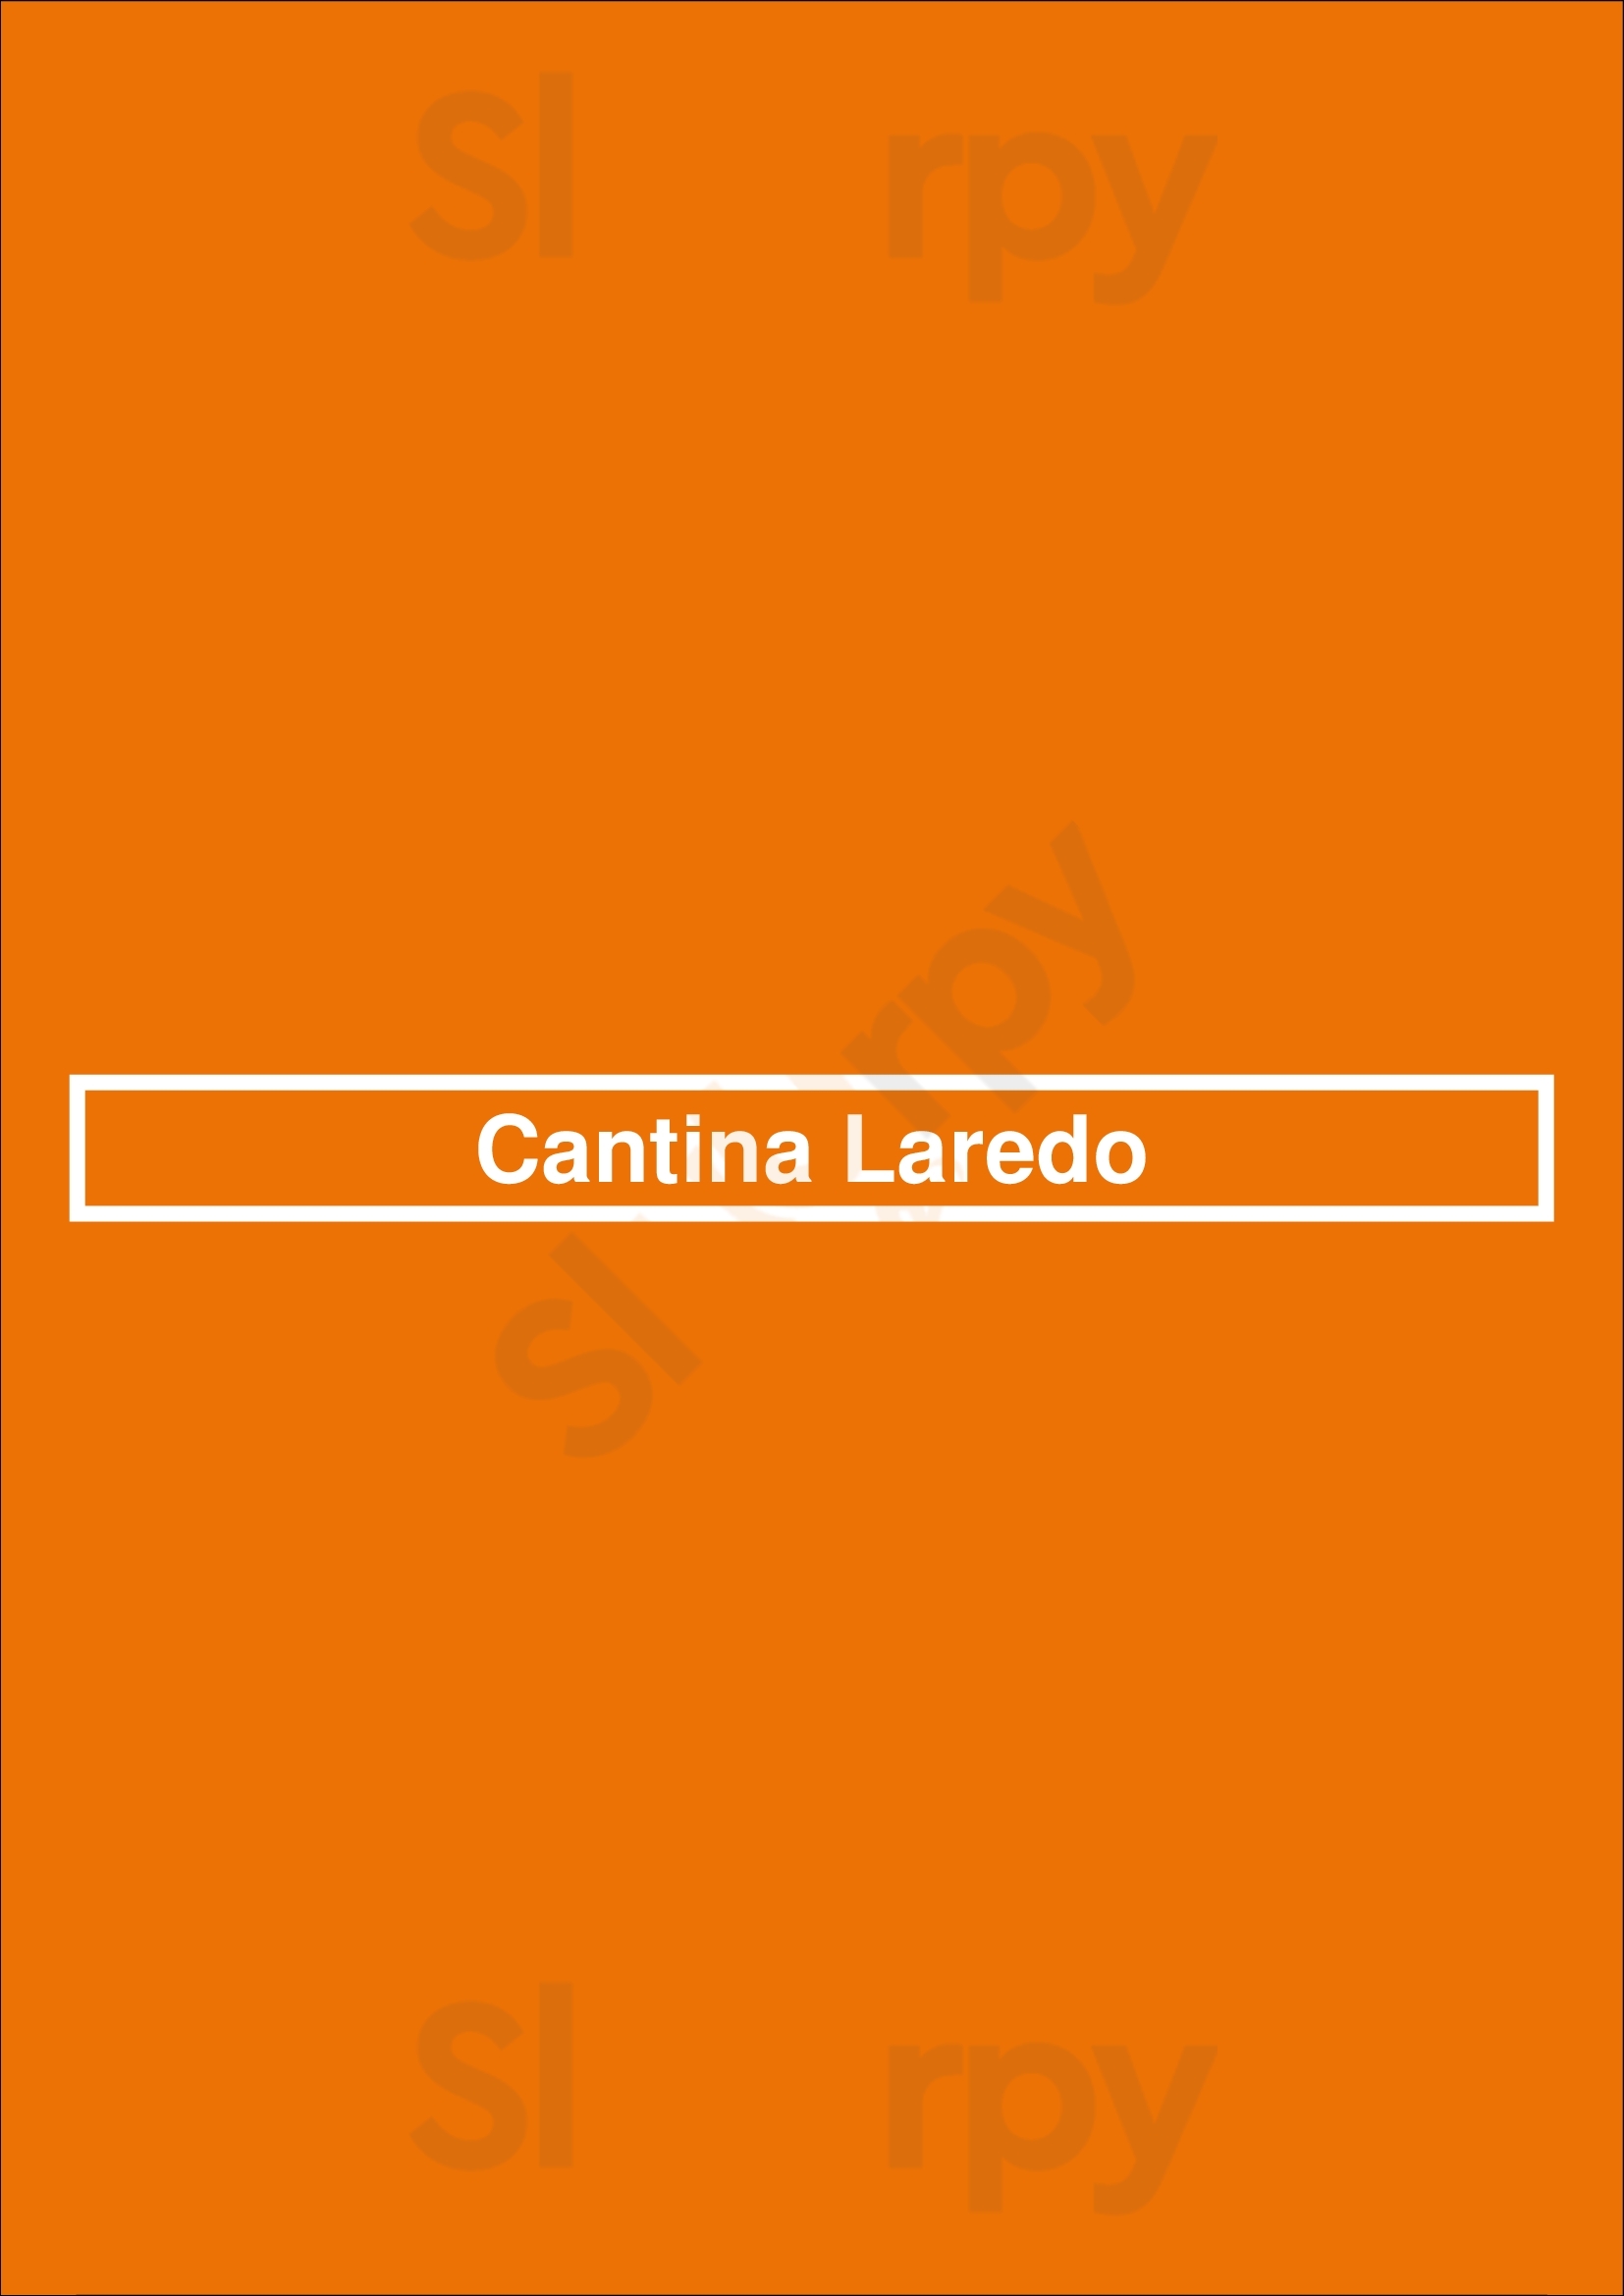 Cantina Laredo Addison Menu - 1